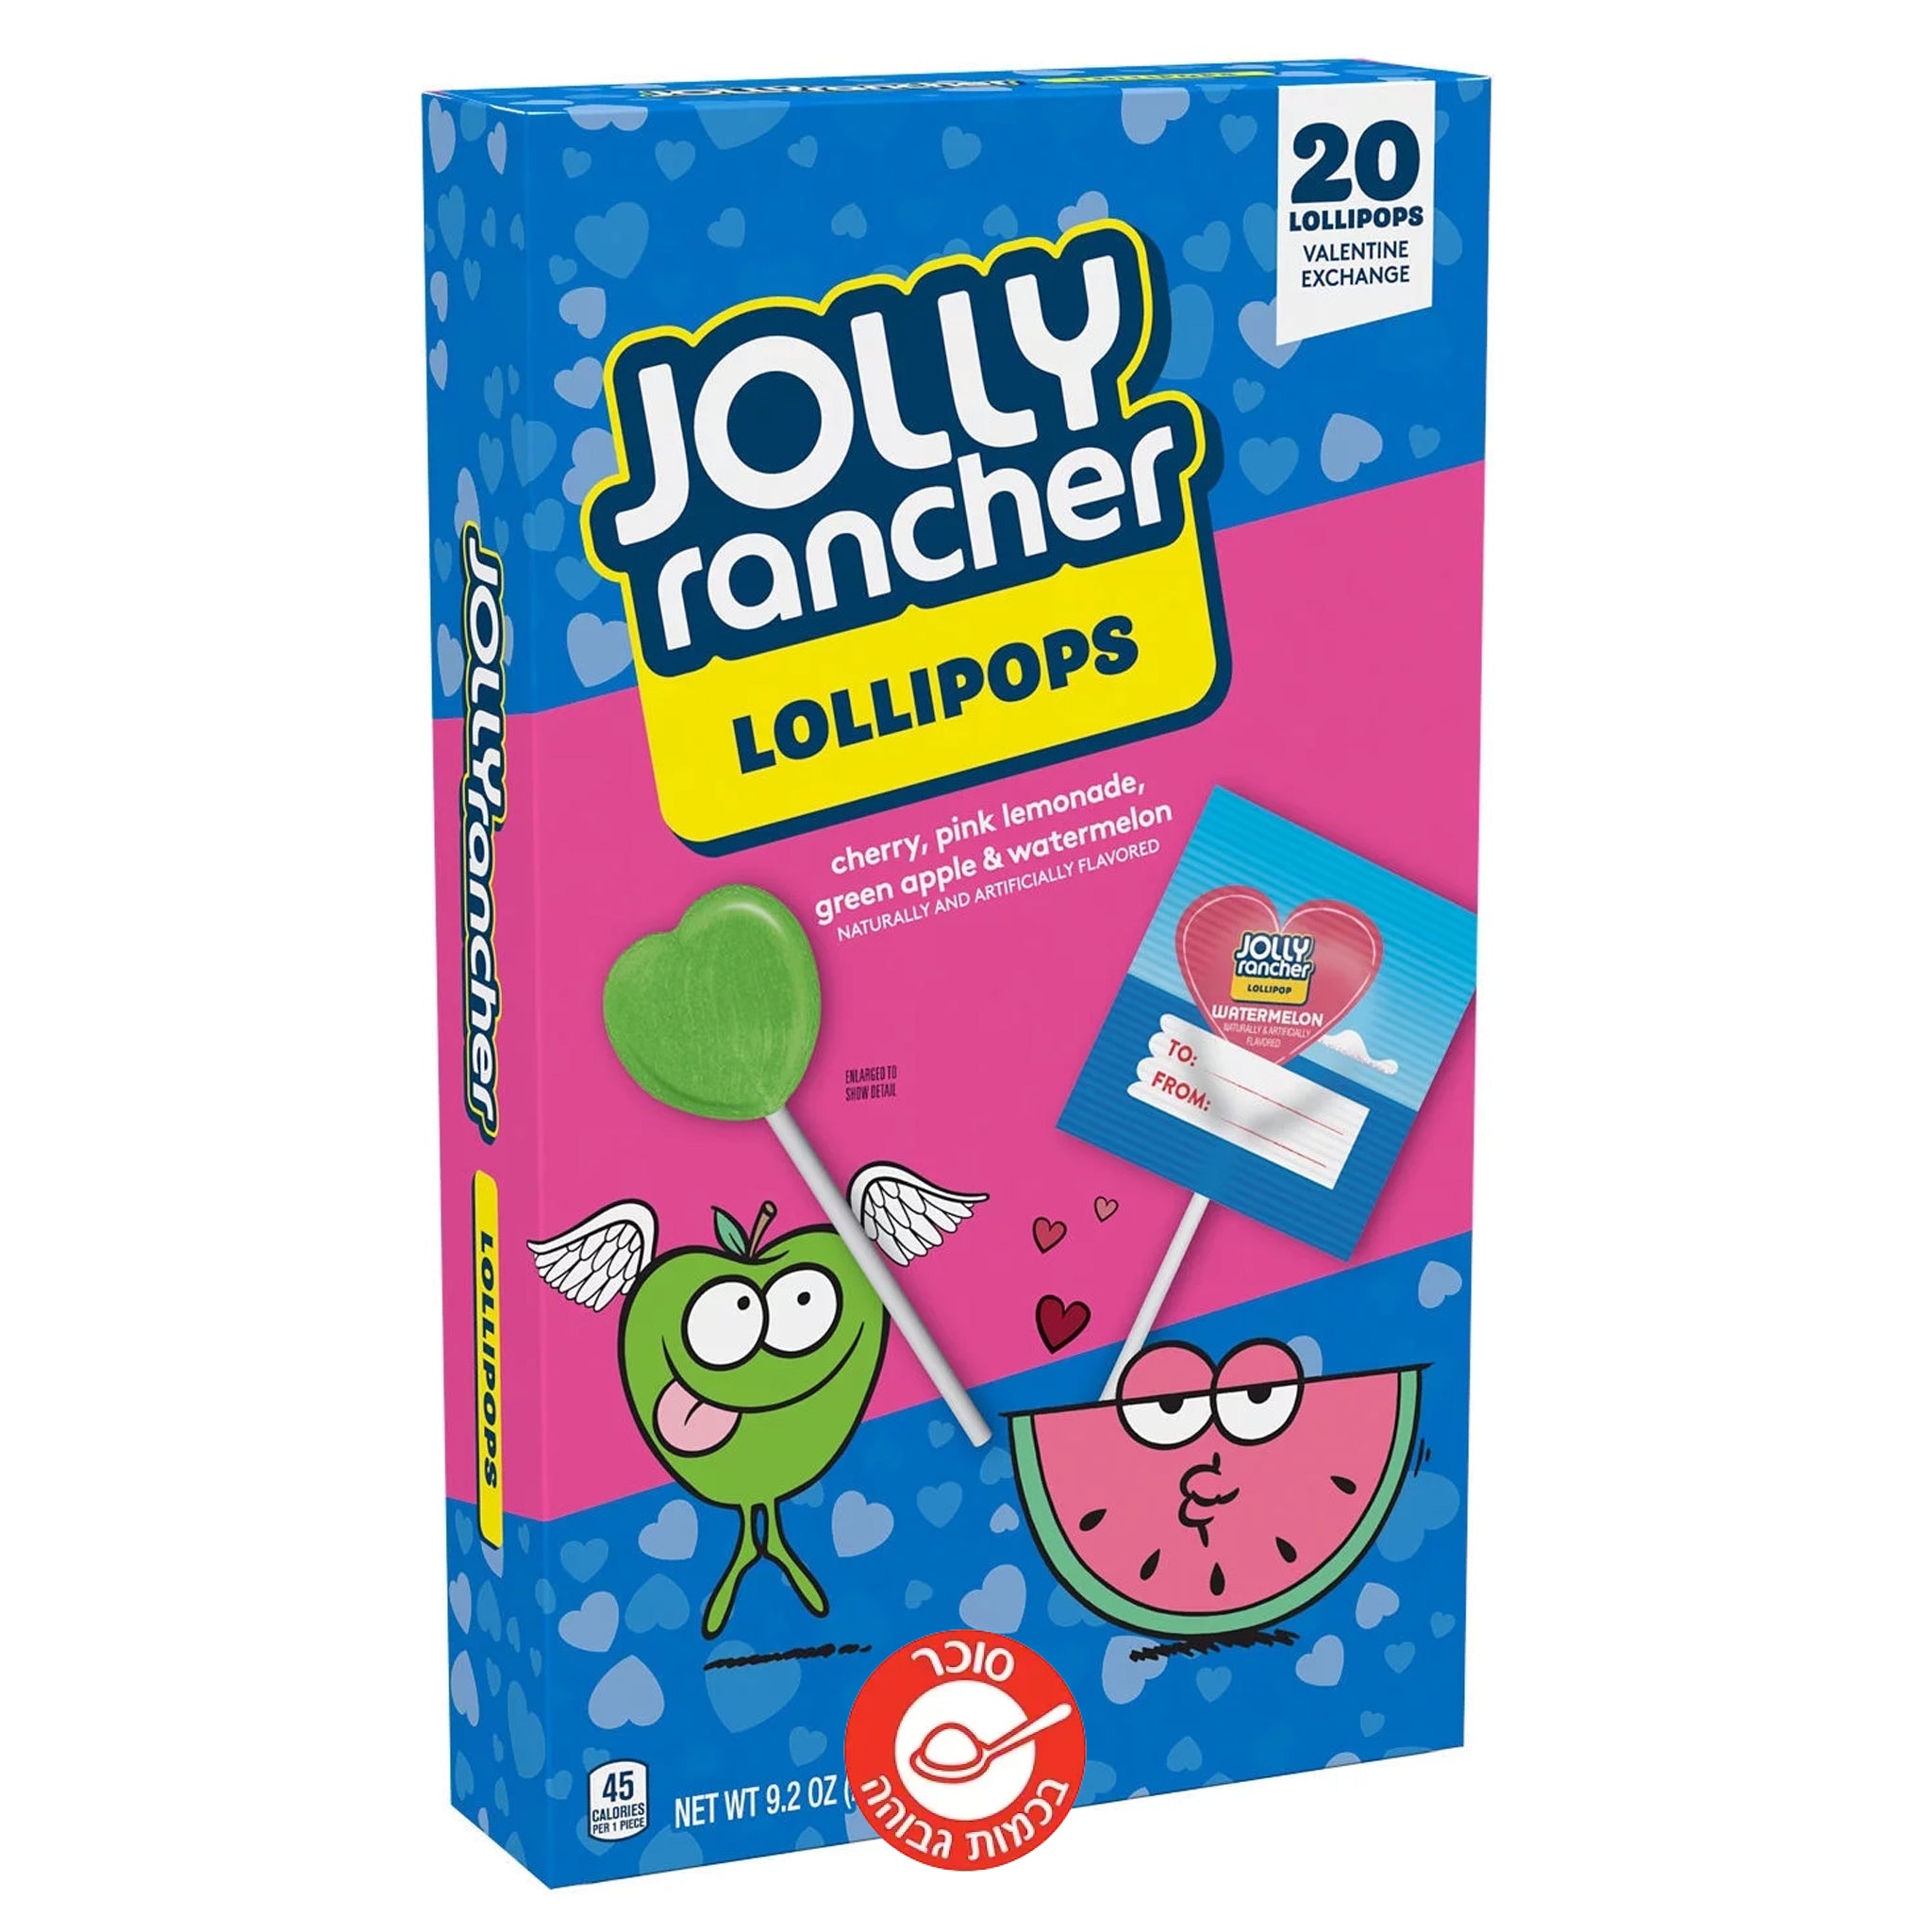 Jolly Rancher 20 Lollipops סוכריות על מקל ג’ולי ראנצ’ר חטיפים